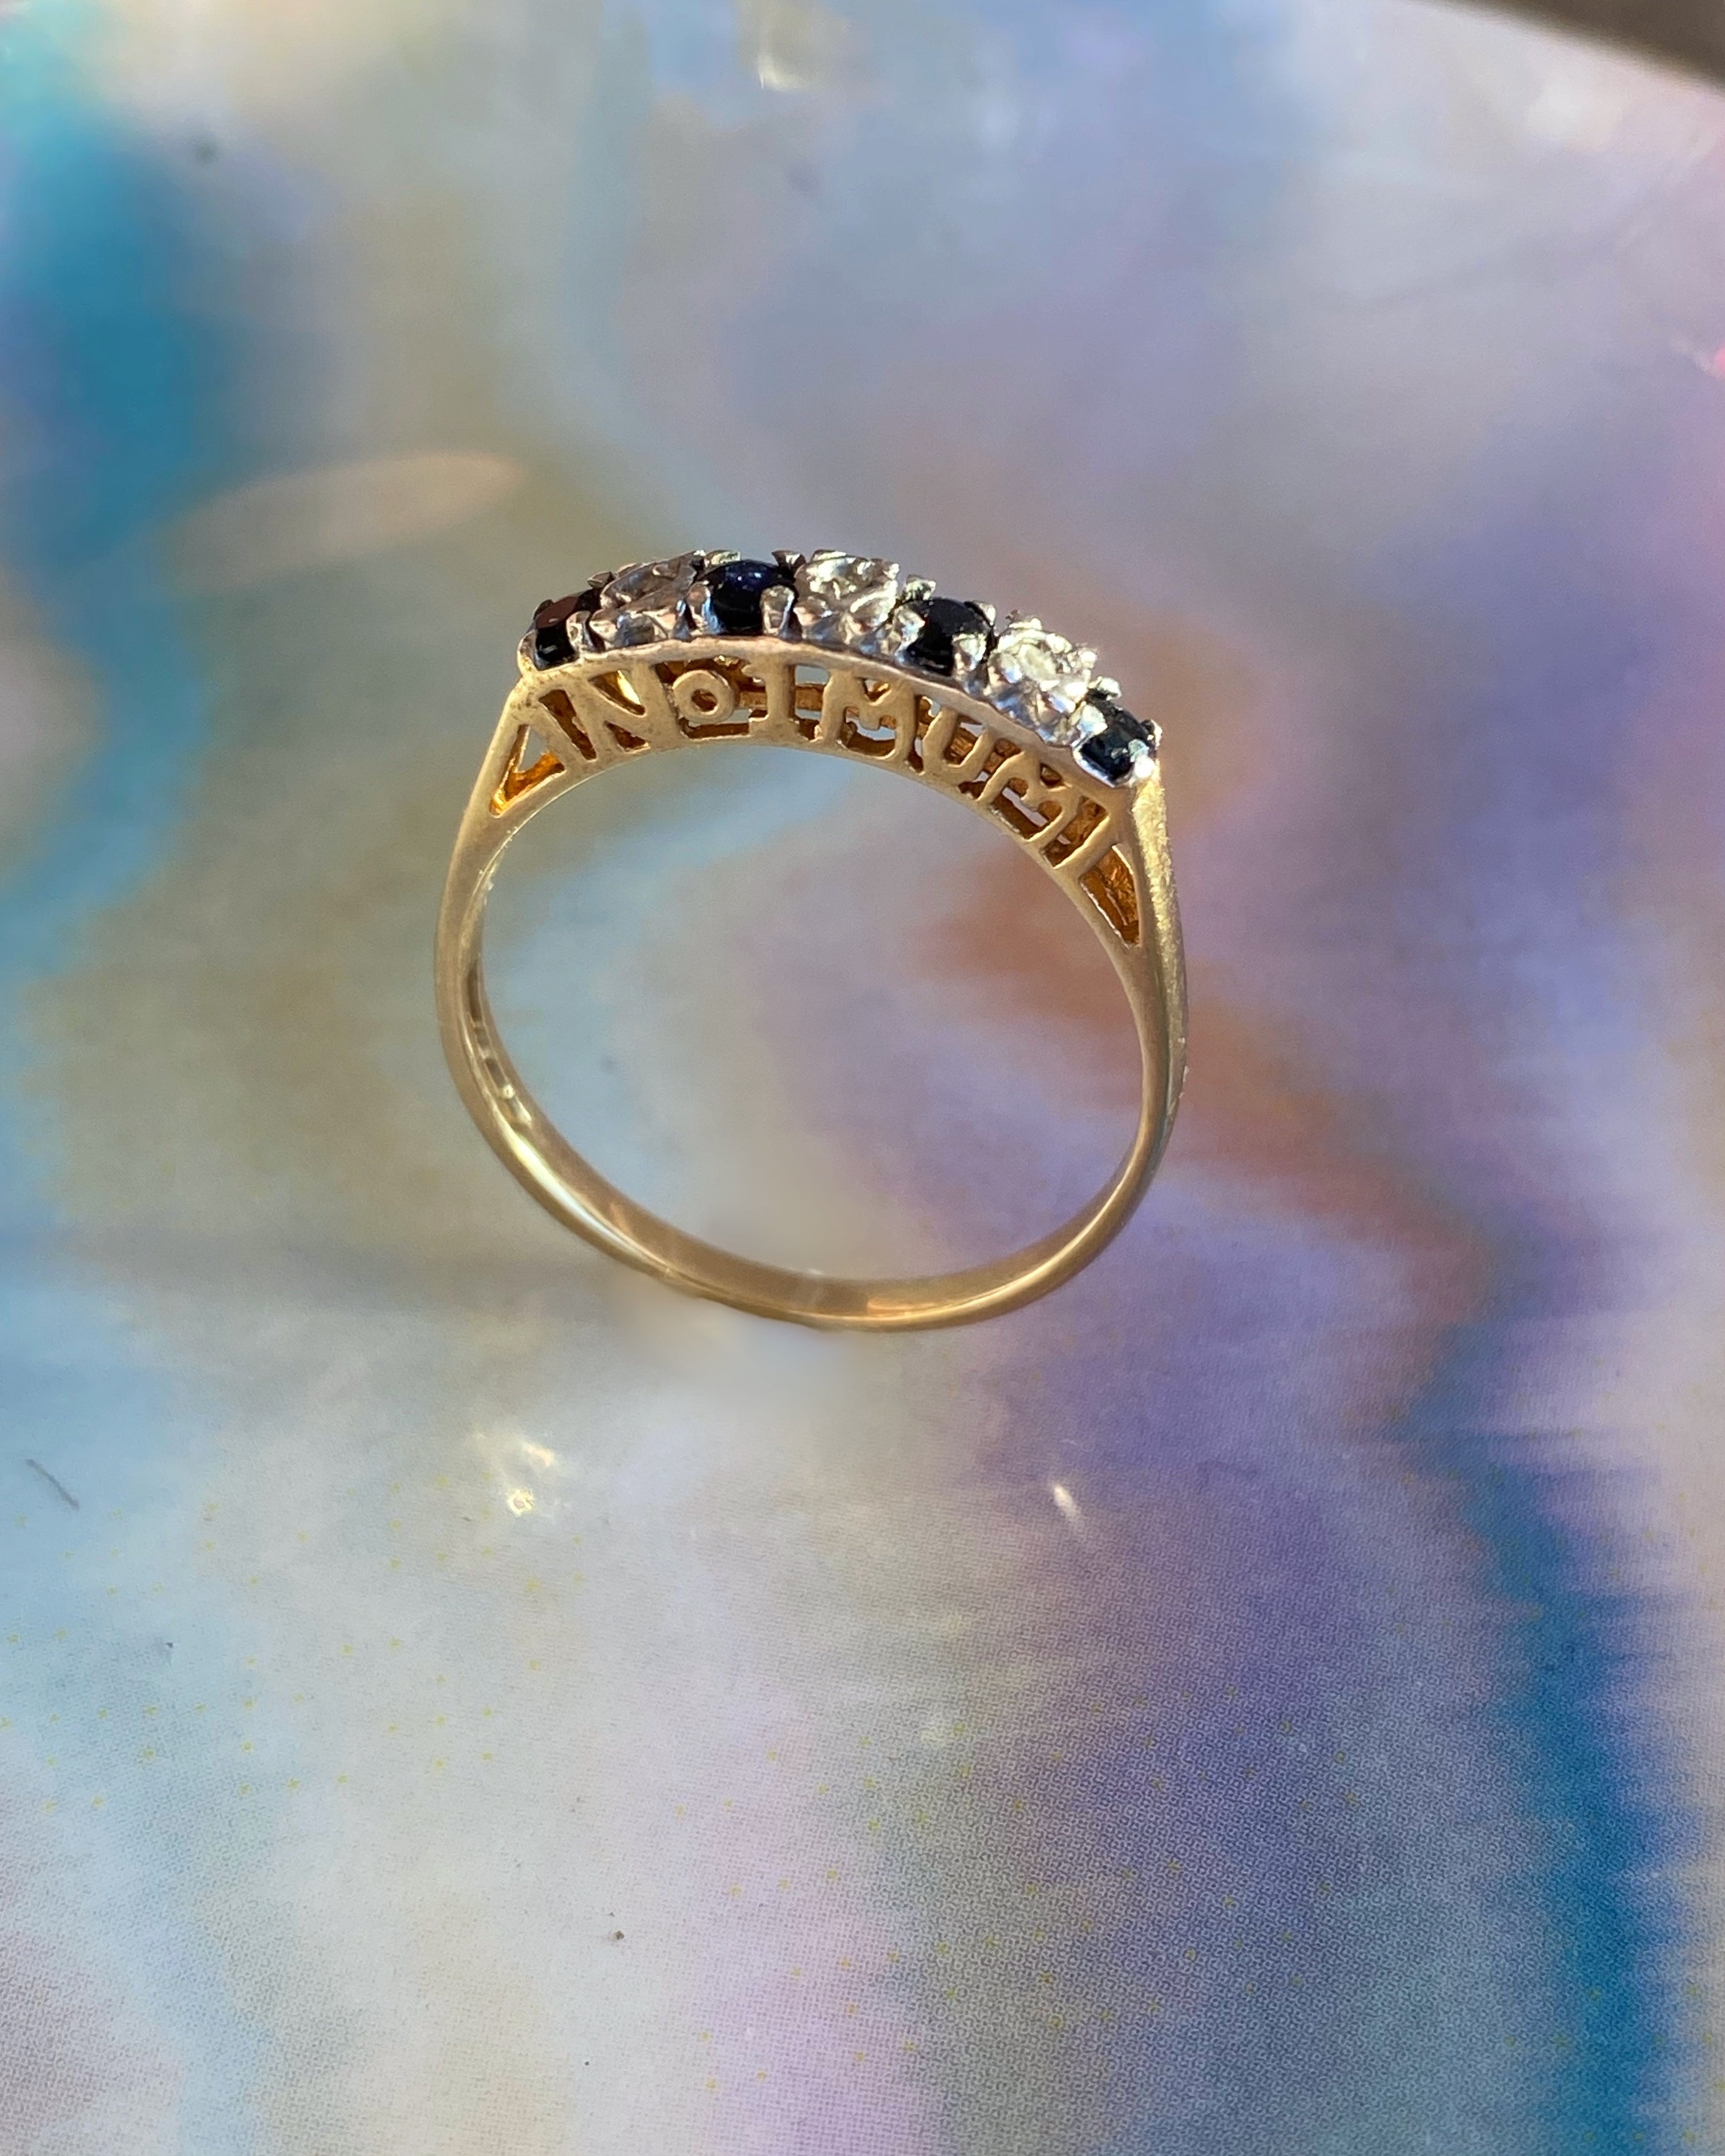 9ct Gold “No 1 Mum" ring